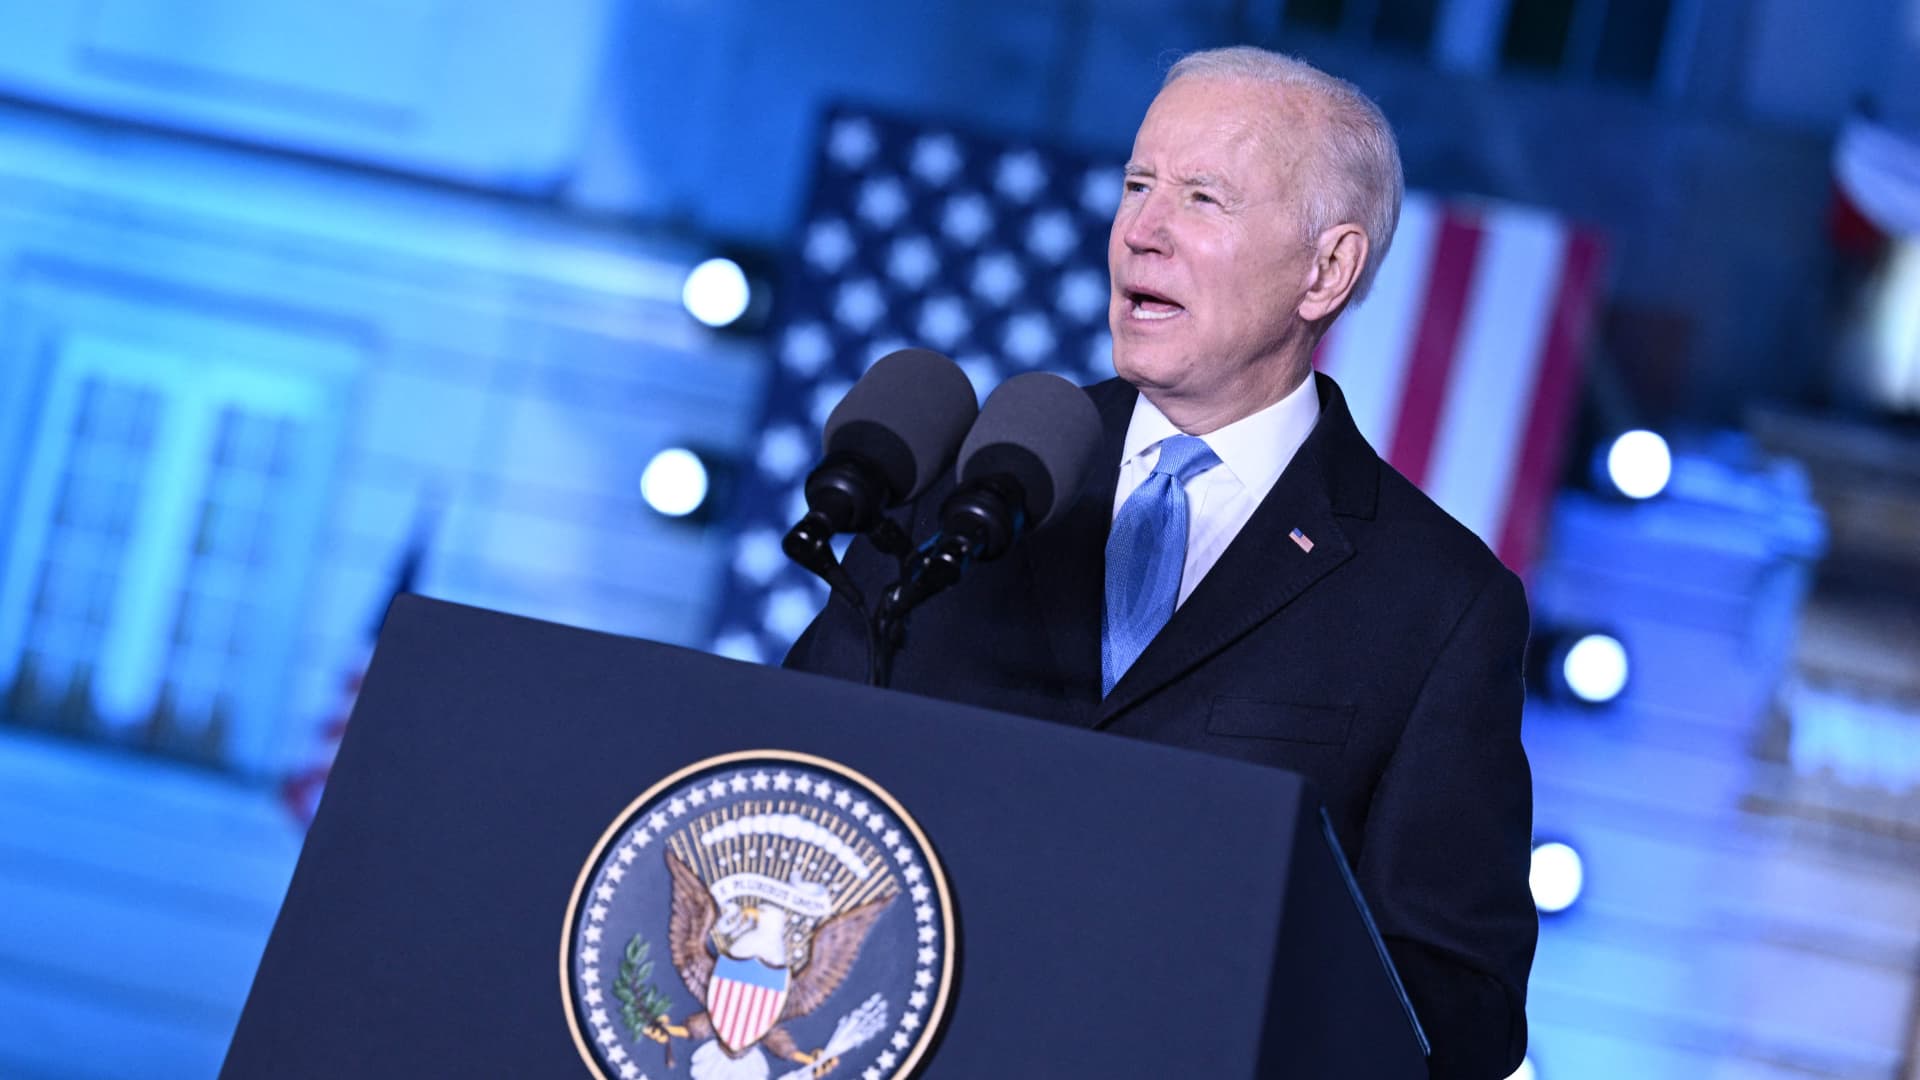 Biden says Putin ‘cannot remain in power’ in sweeping speech on Russian invasion of Ukraine